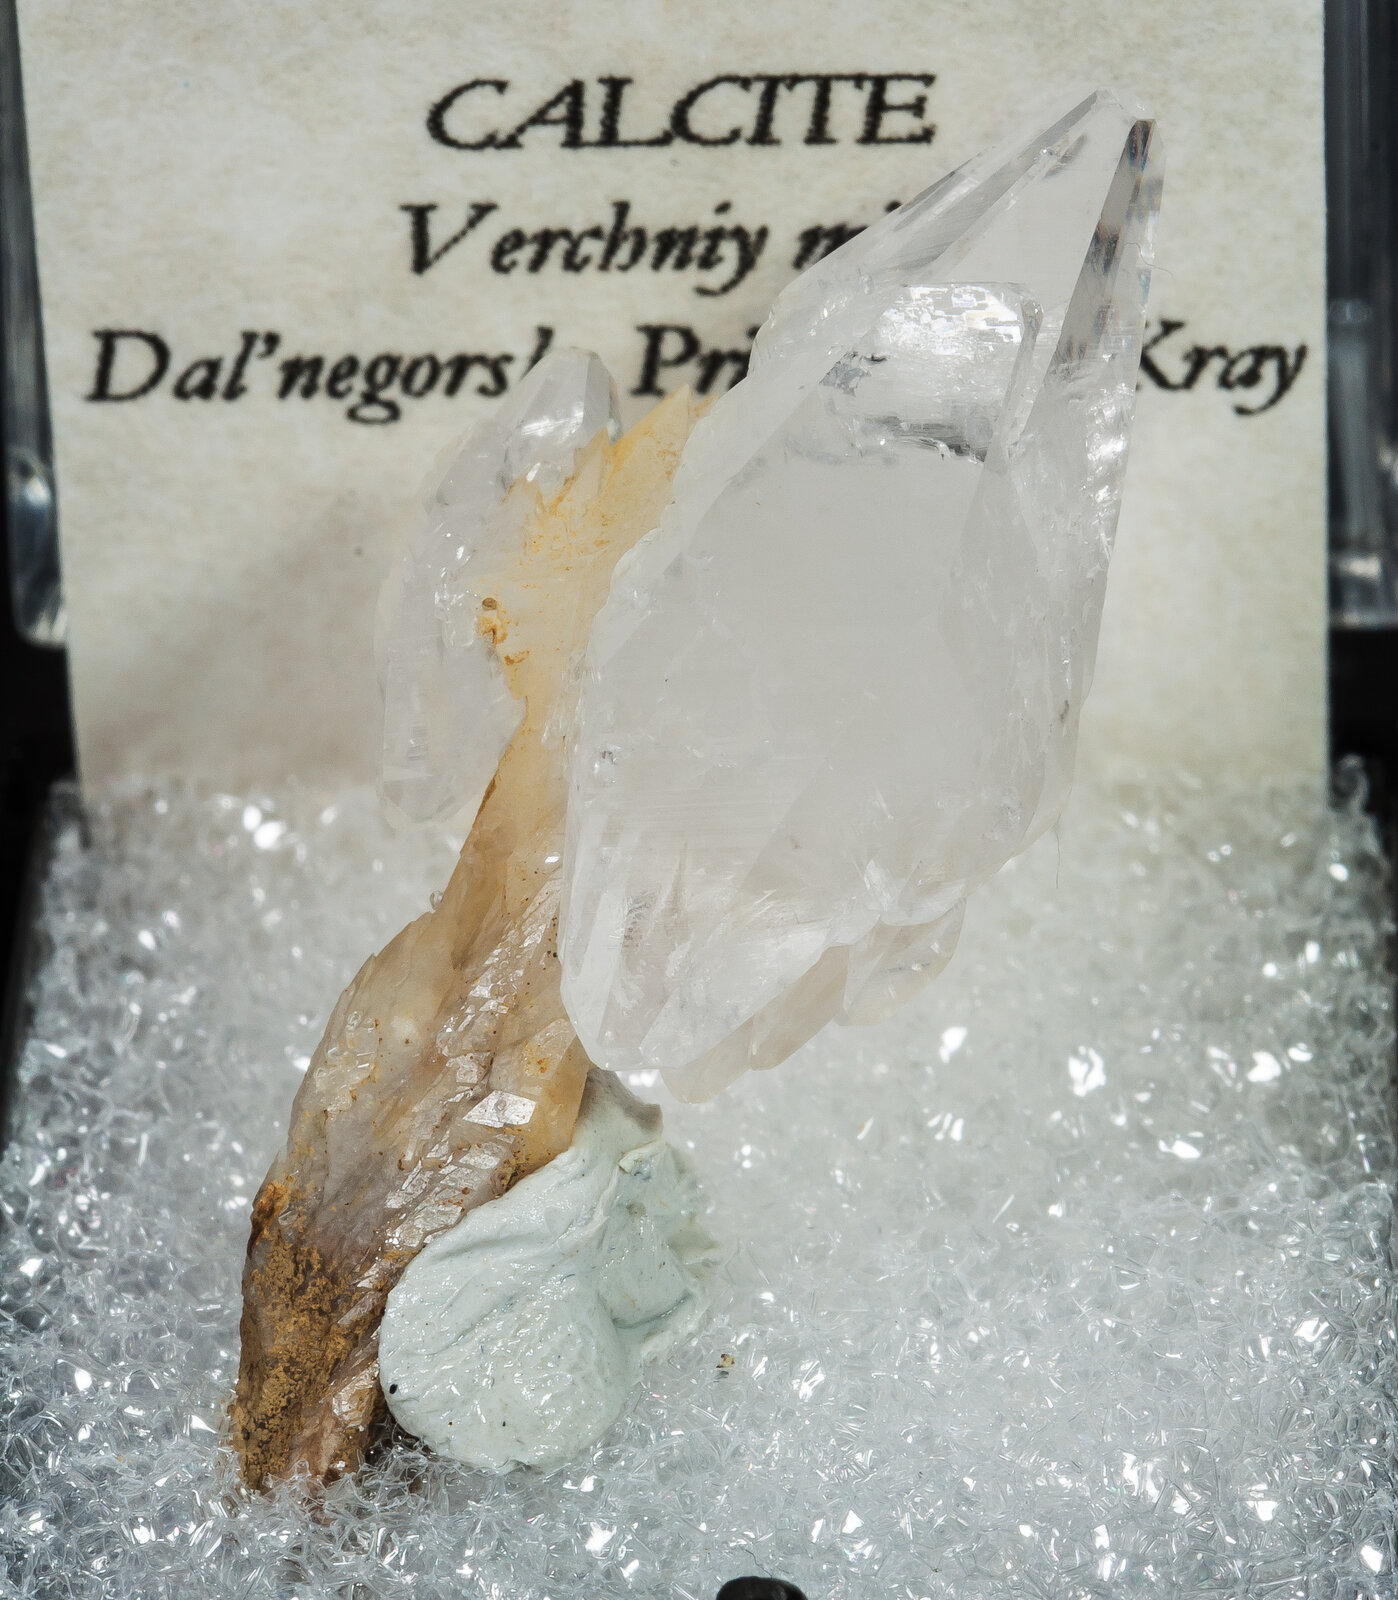 specimens/s_imagesAN8/Calcite-TBX13AN8f2.jpg